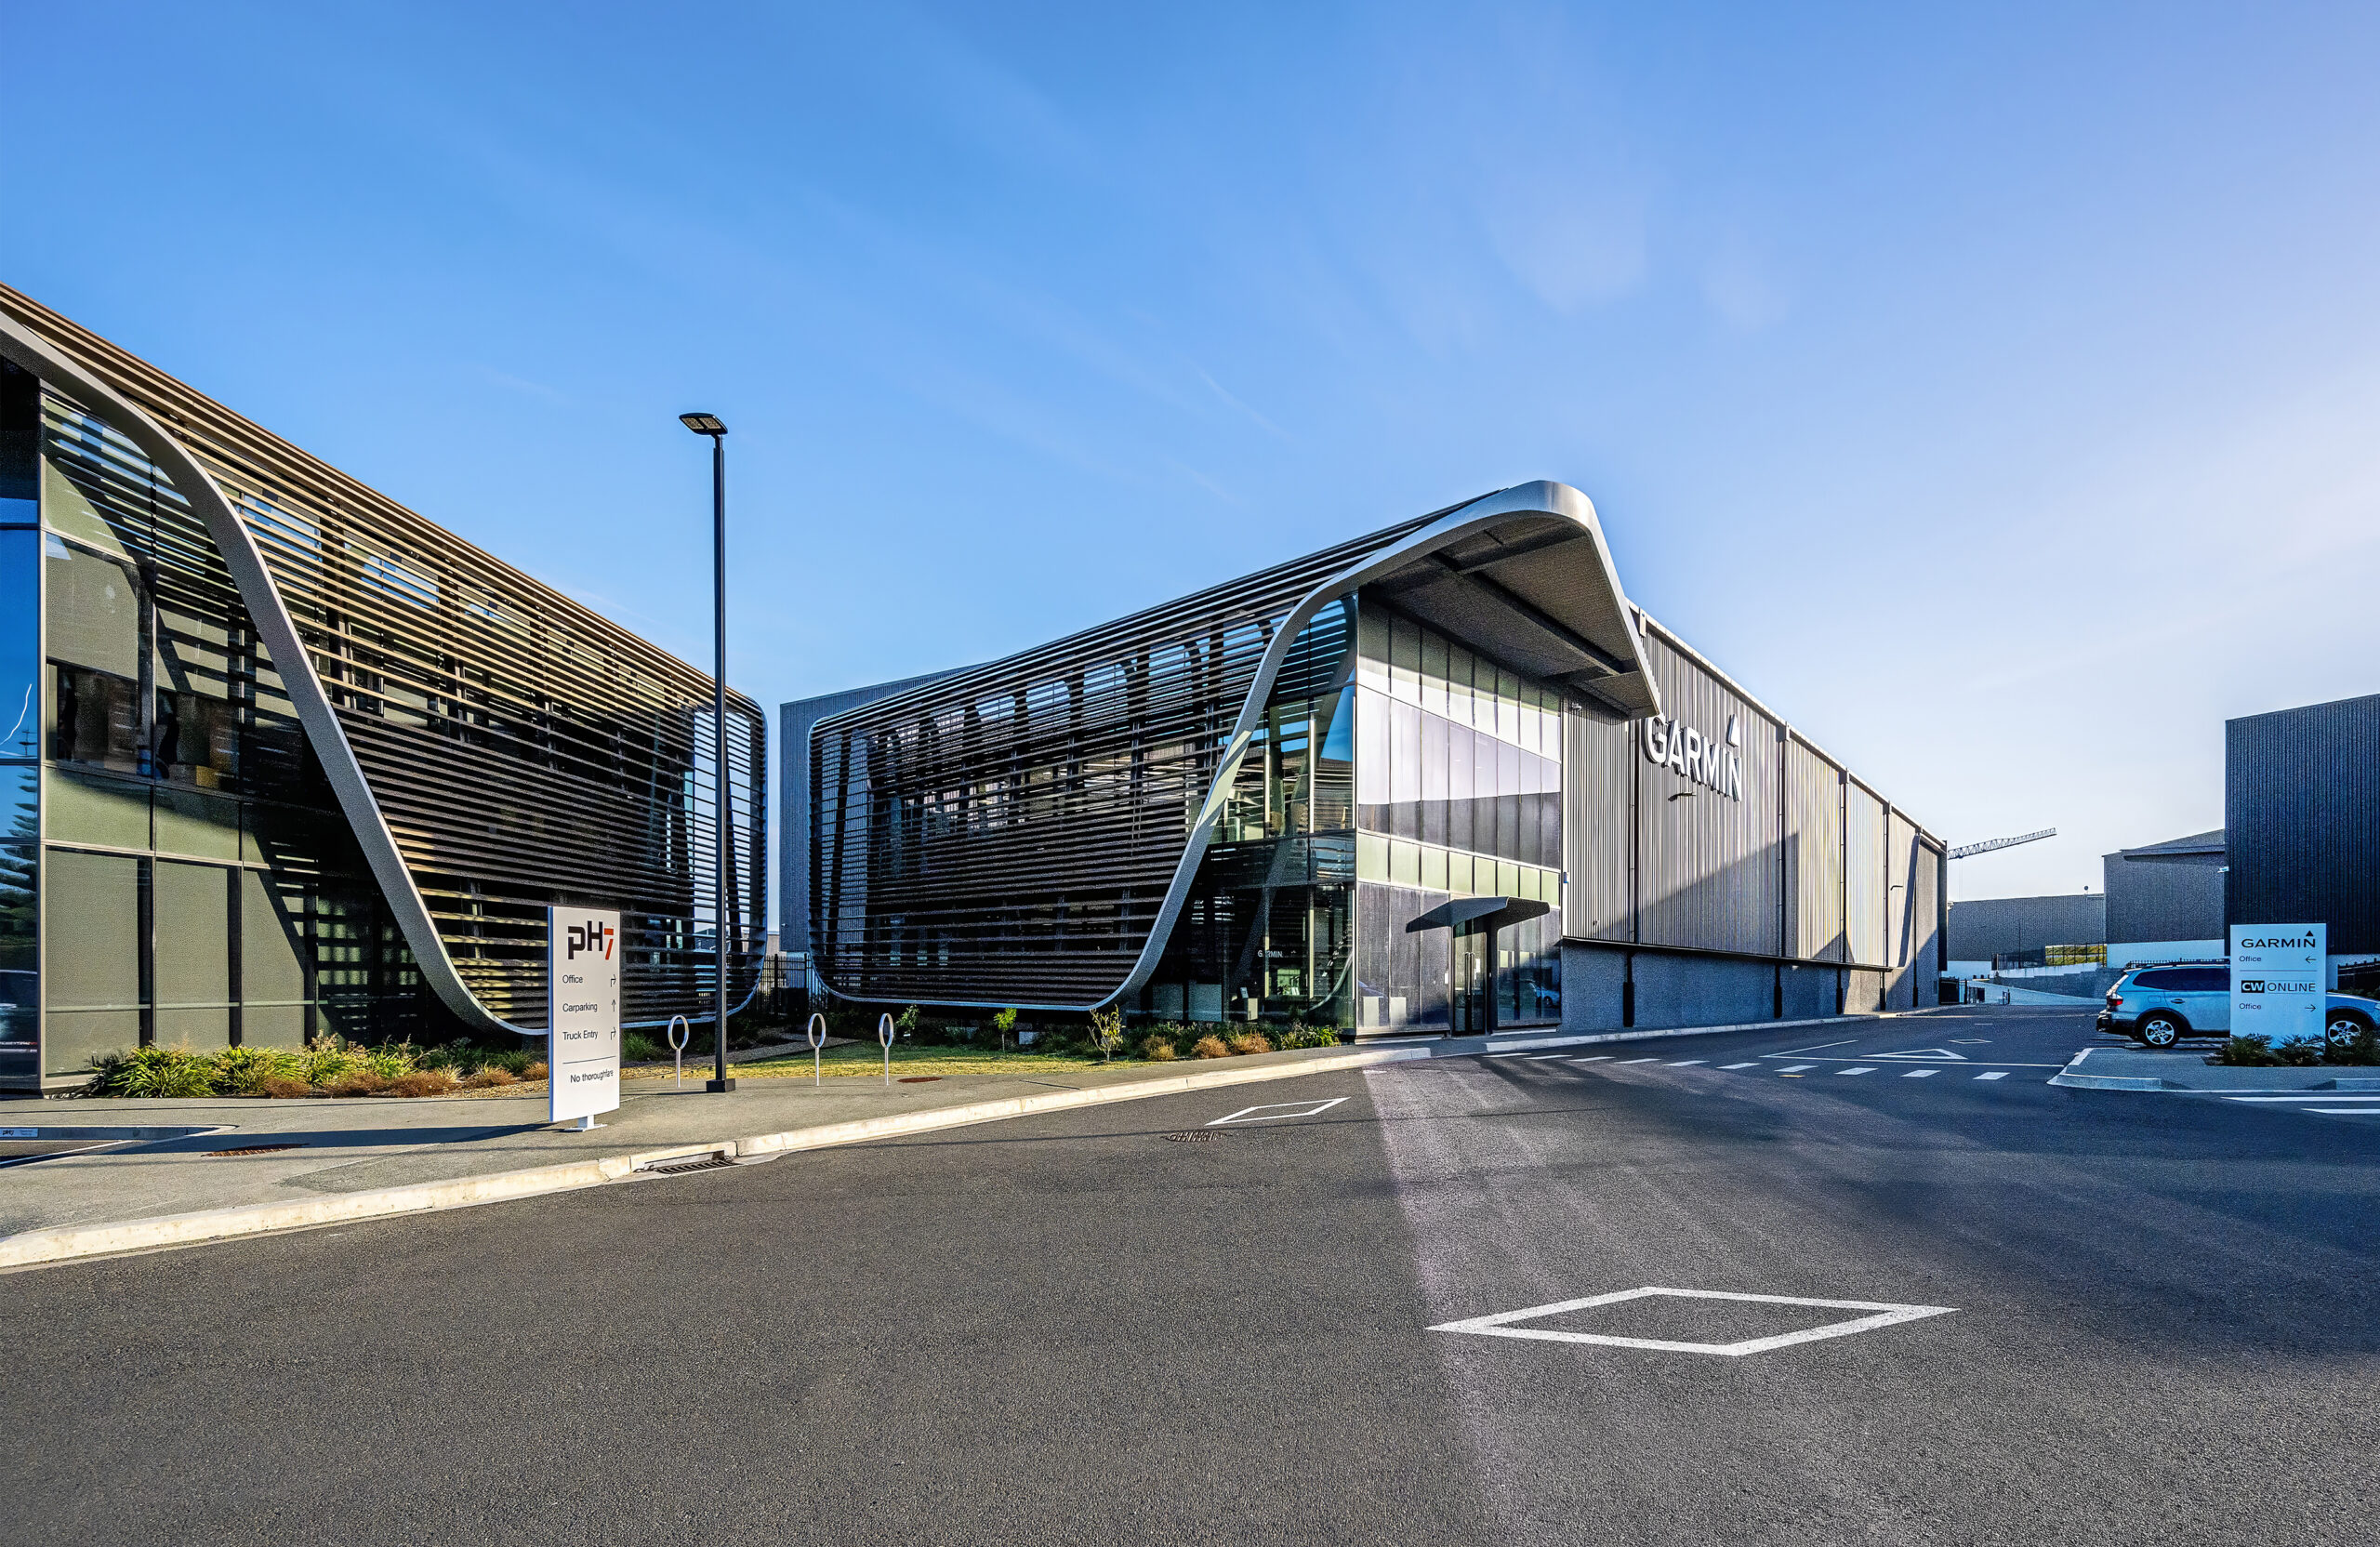 Tāwharau Lane is NZs first 6 Green Star industrial development